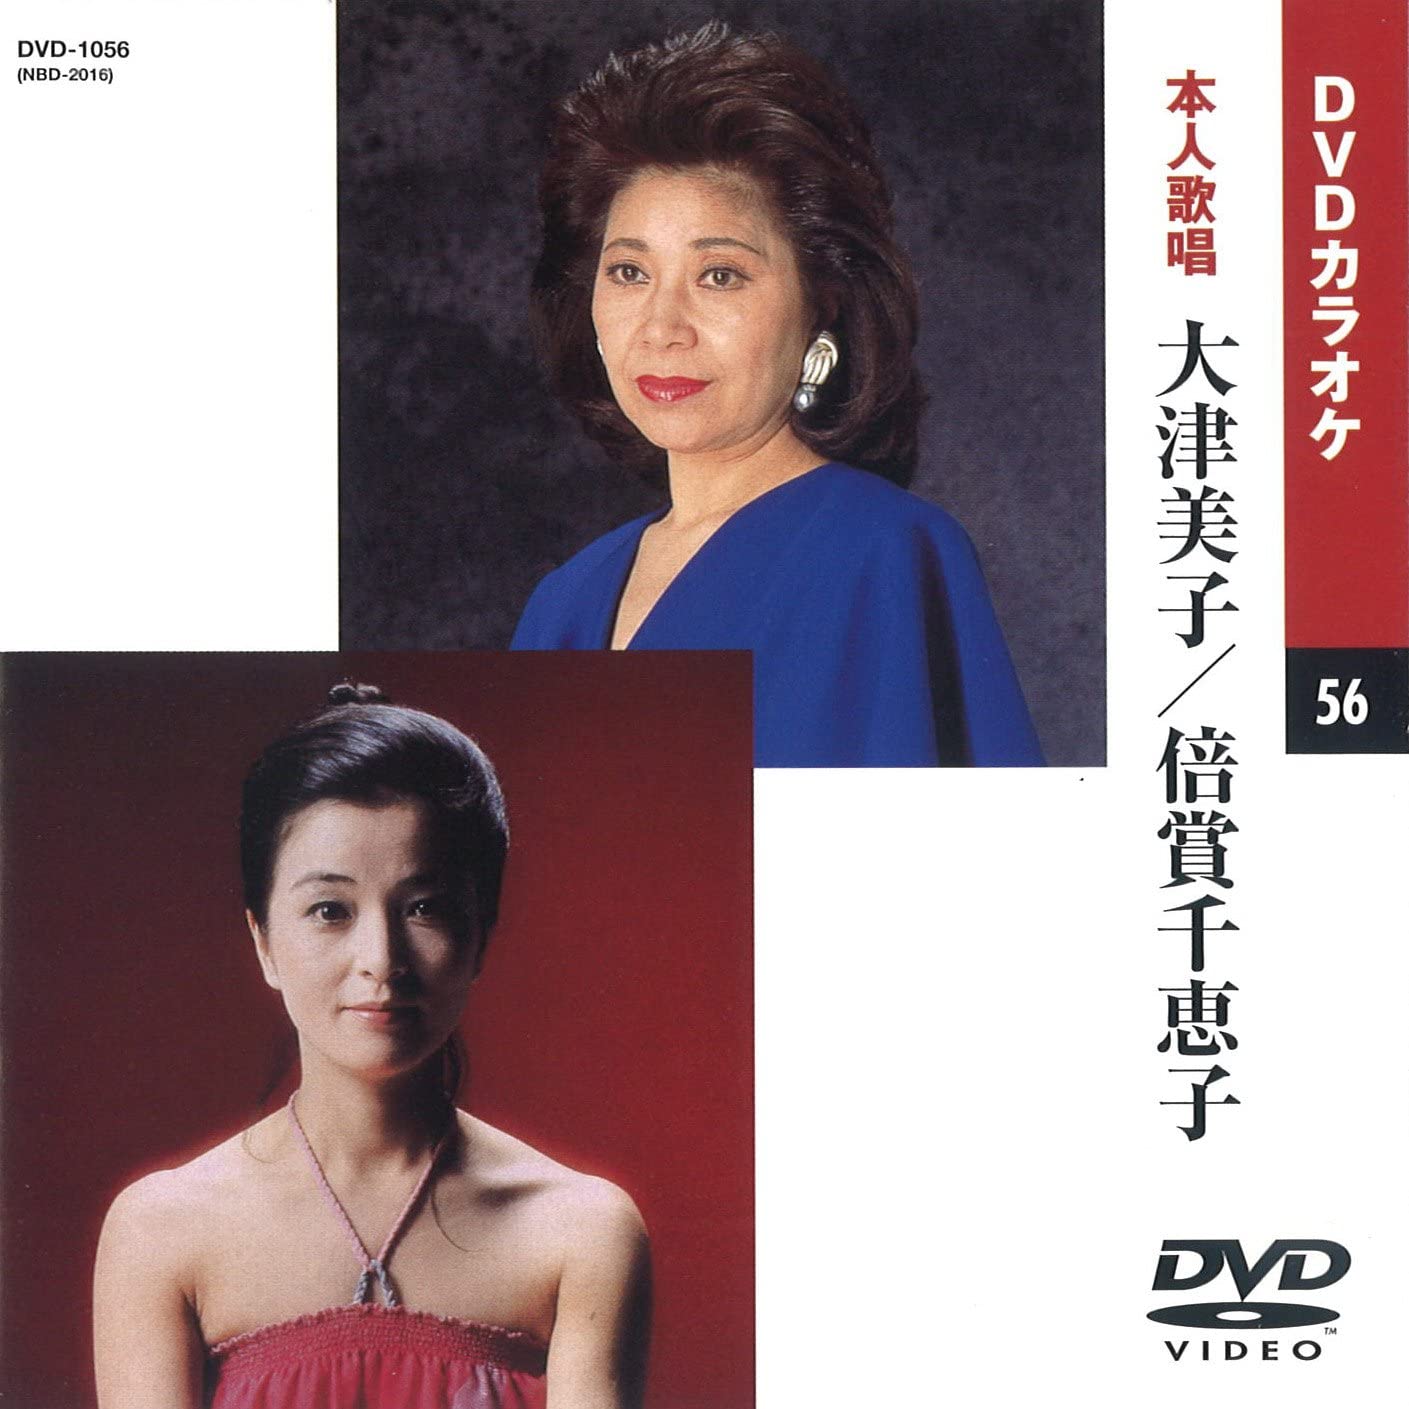 [ person himself ..DVD karaoke ] large Tsu beautiful ./ times . Chieko (DVD karaoke ) DVD-1056